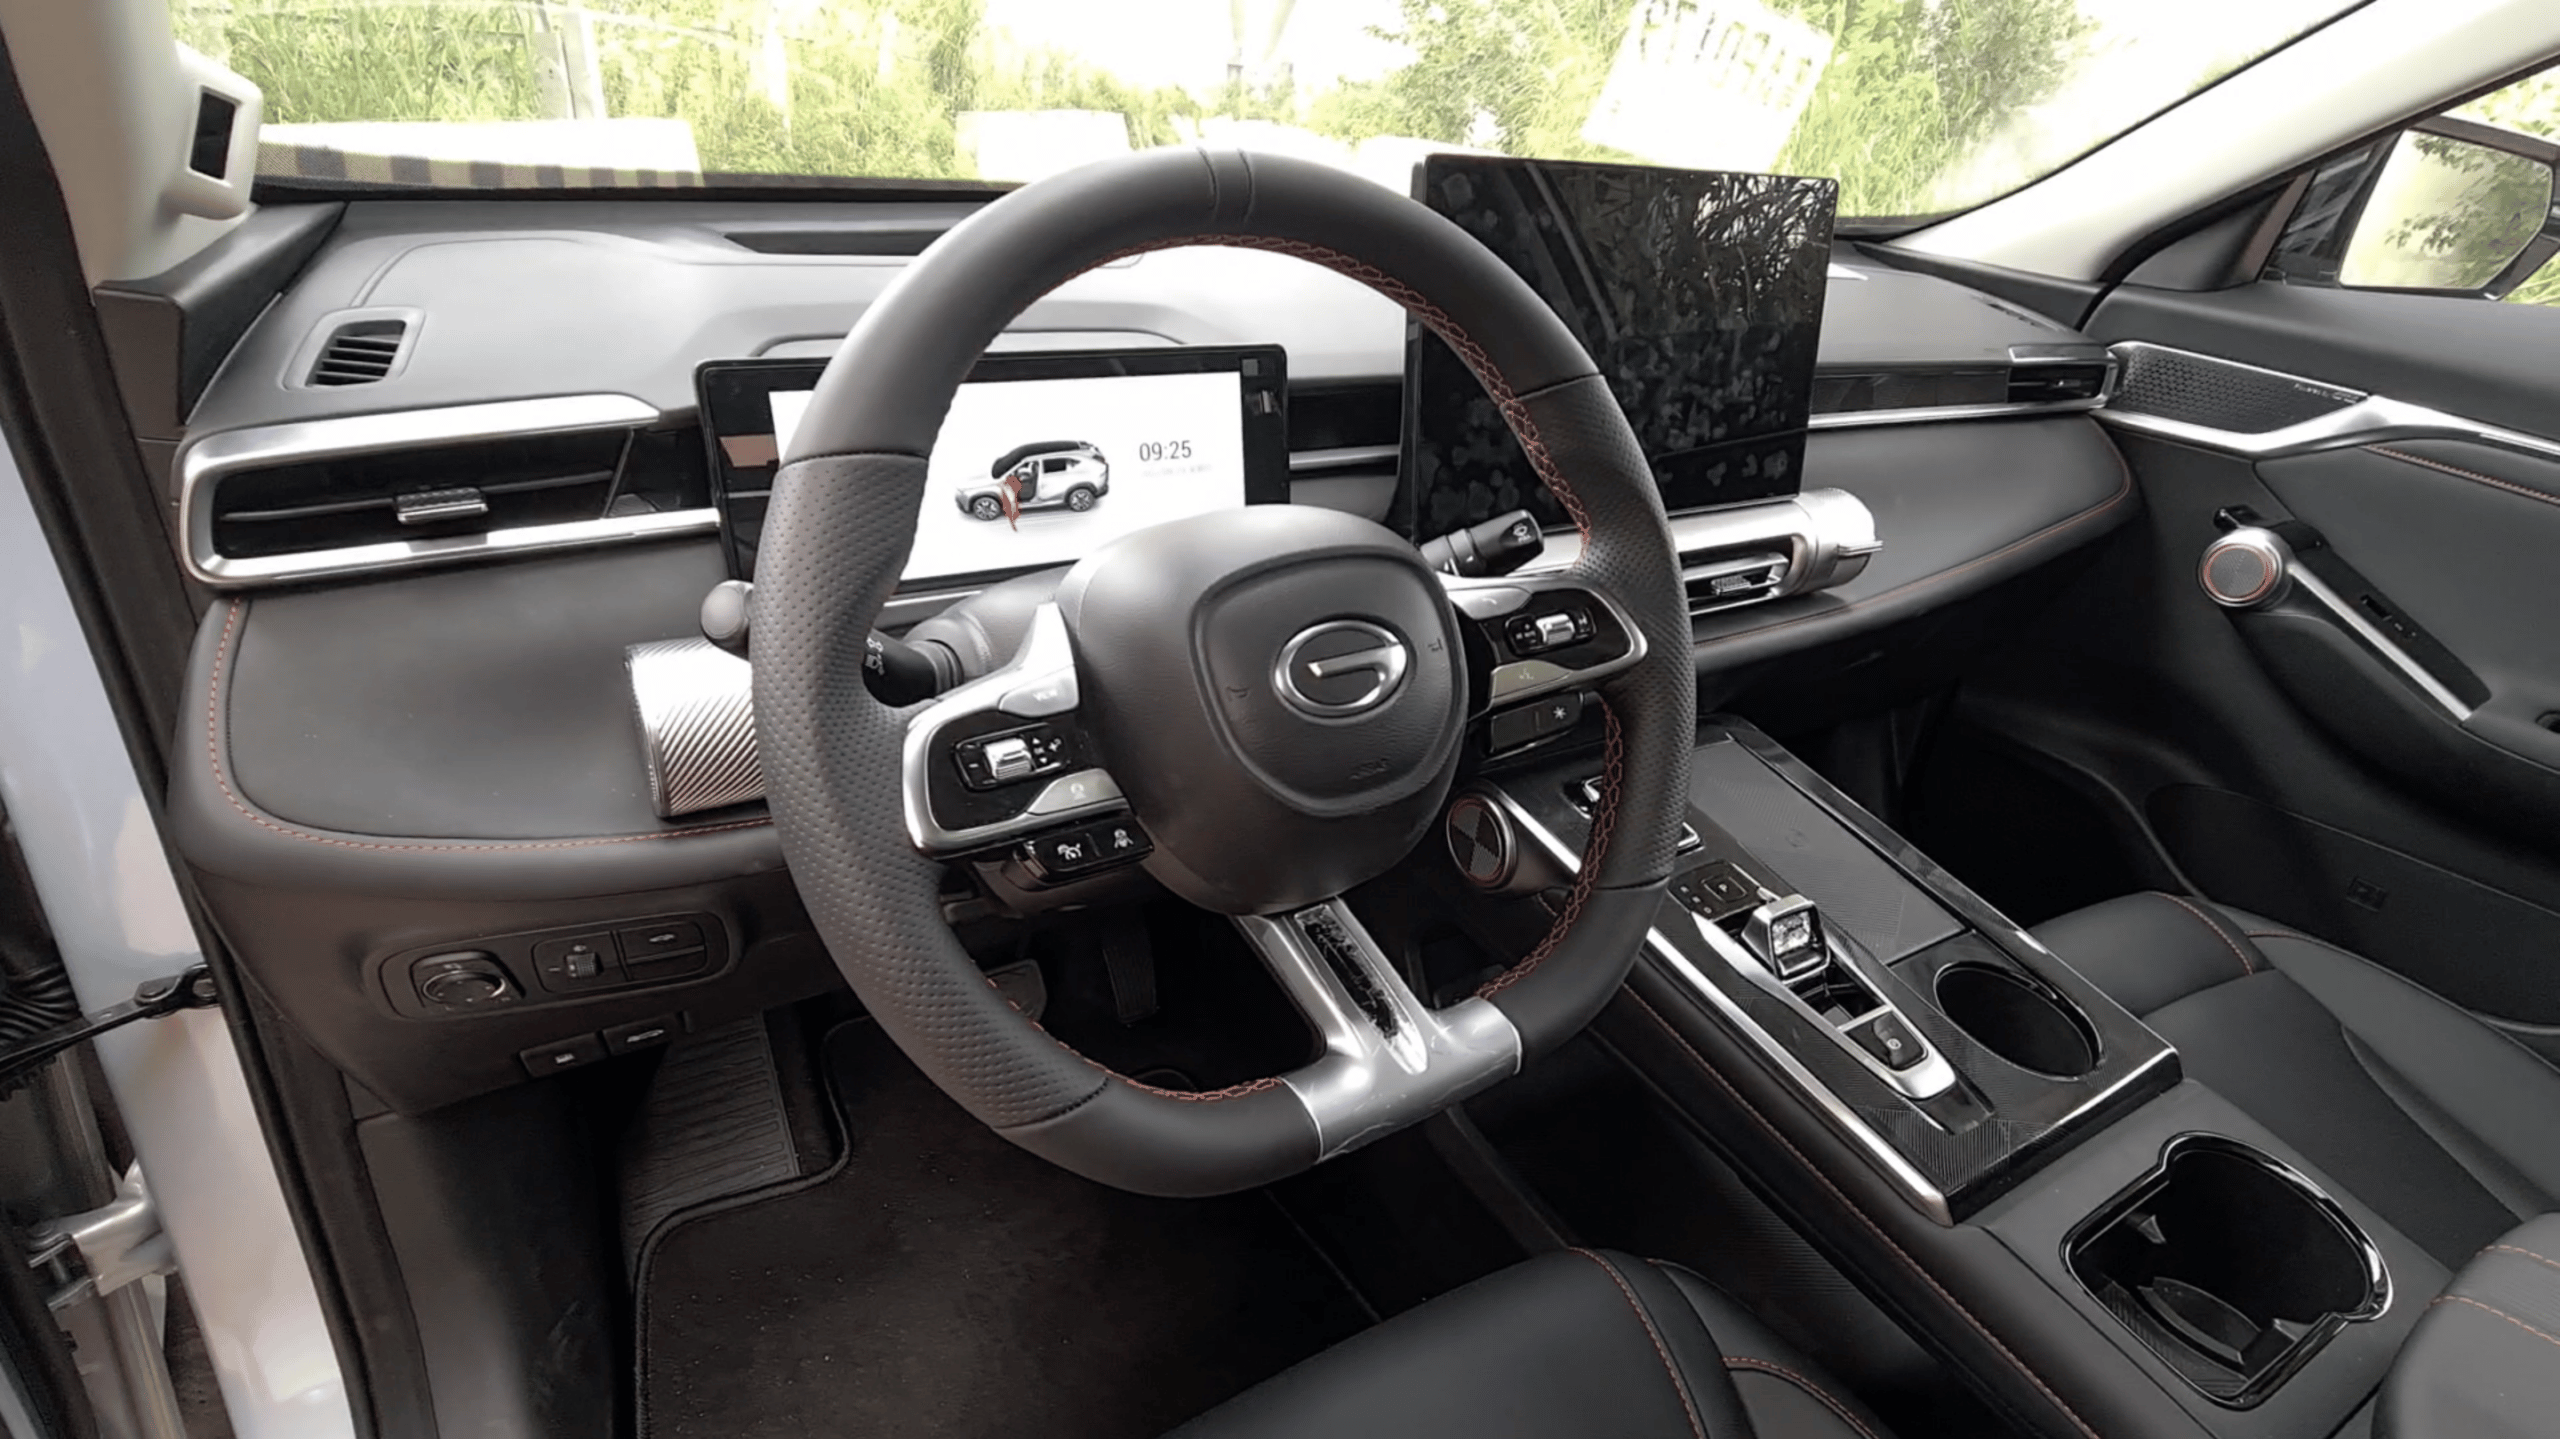 EMKOO Steering Wheel